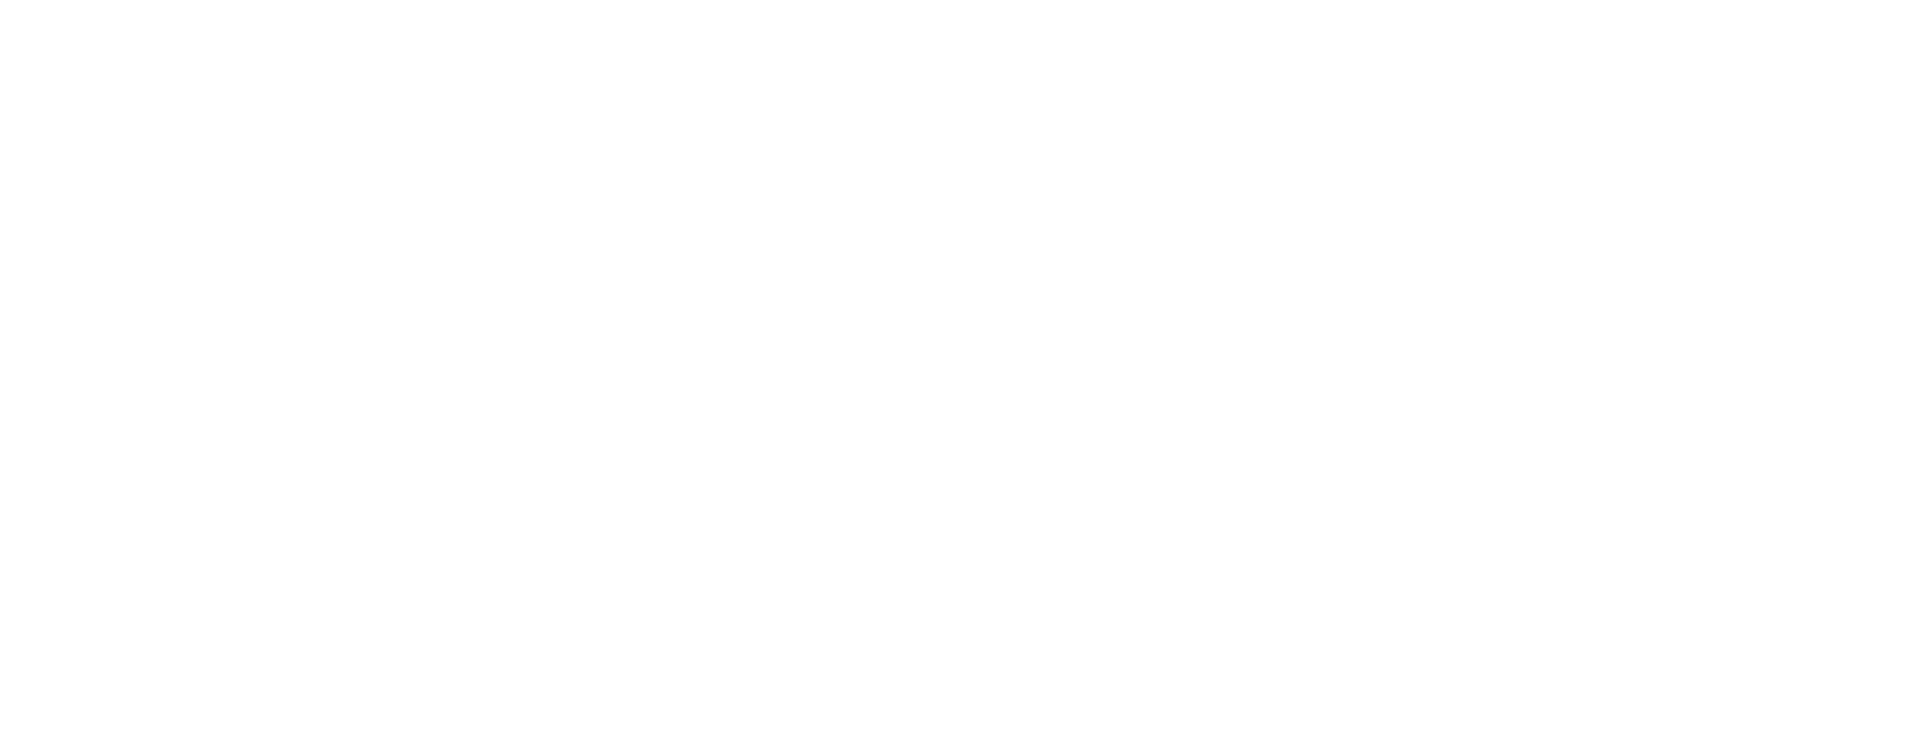 SOULWOOD